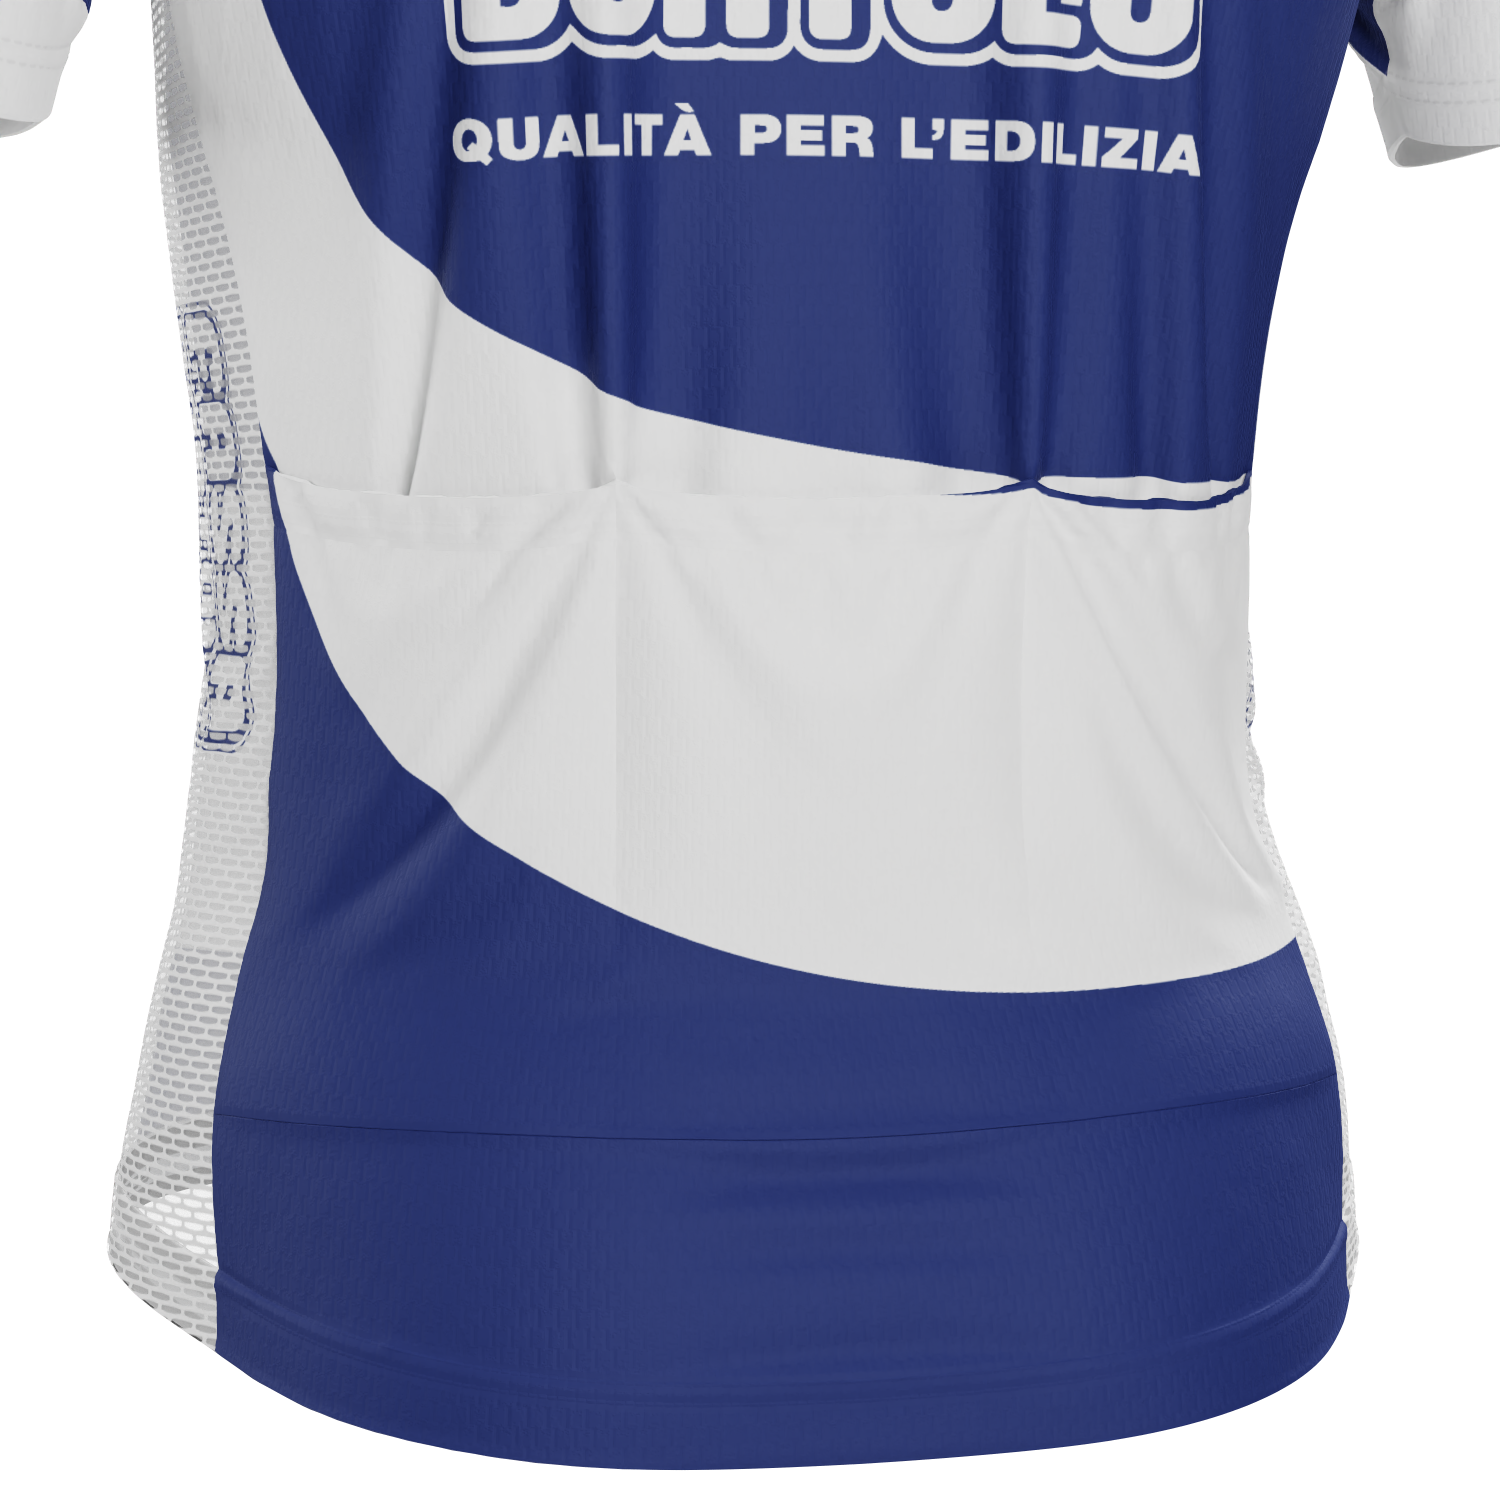 Men's Fassa Bartolo Short Sleeve Cycling Jersey